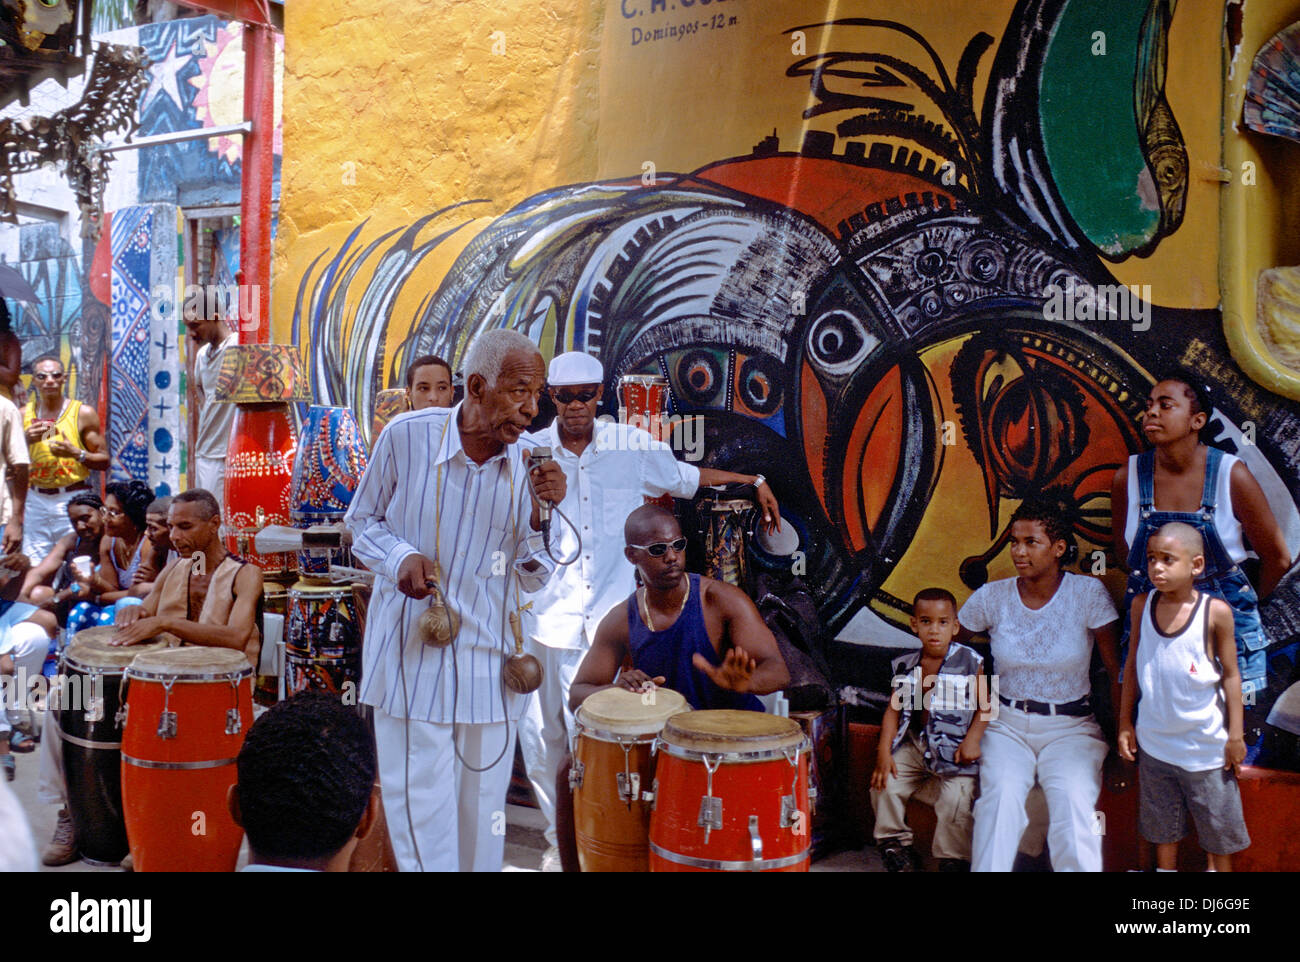 Rhumba band, Callejon de Hamel, Havana, Cuba Foto Stock